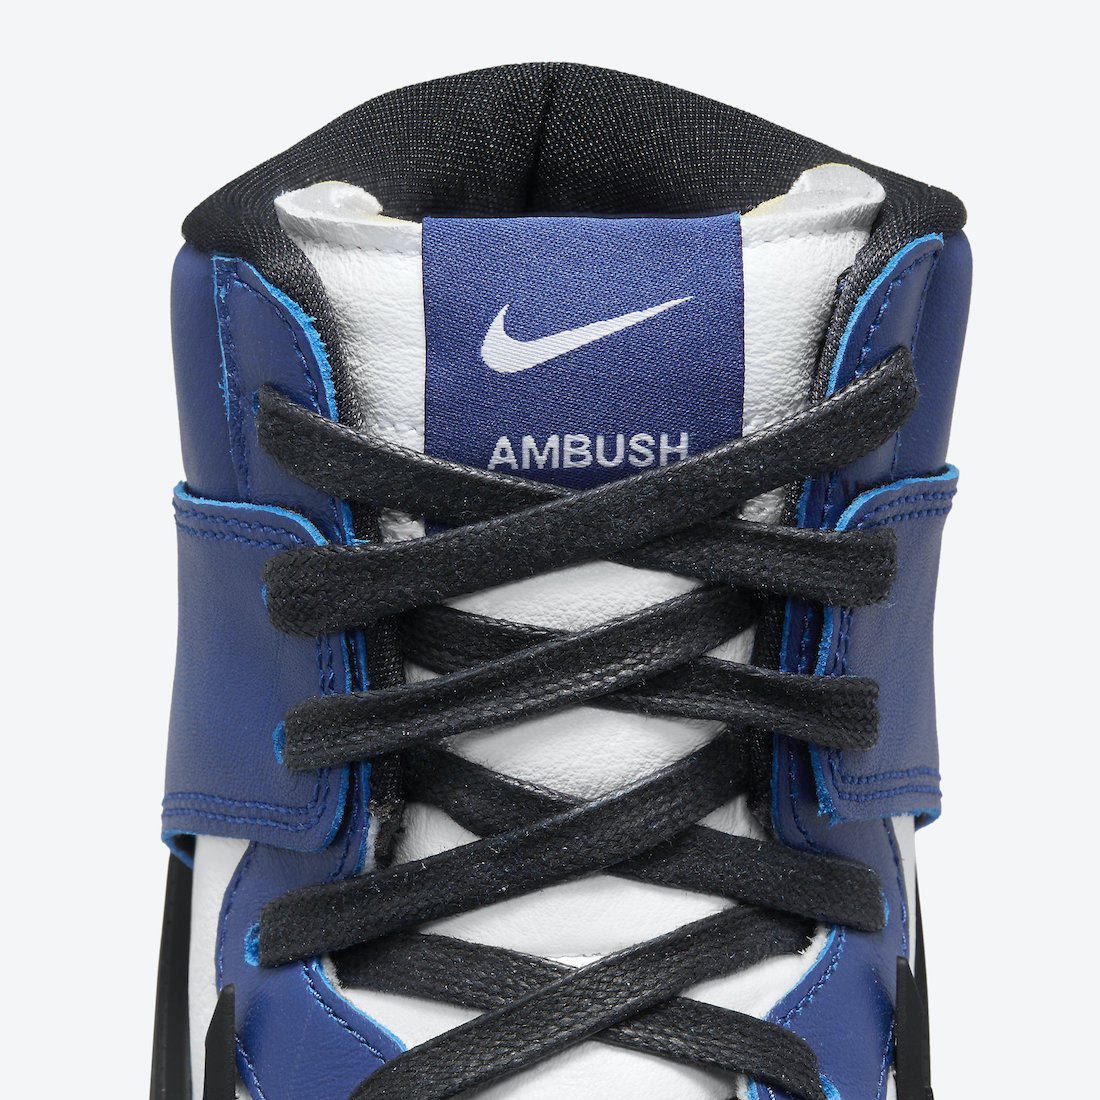 Ambush Nike Dunk High Deep Royal Blue CU7544-400 Release Date Price